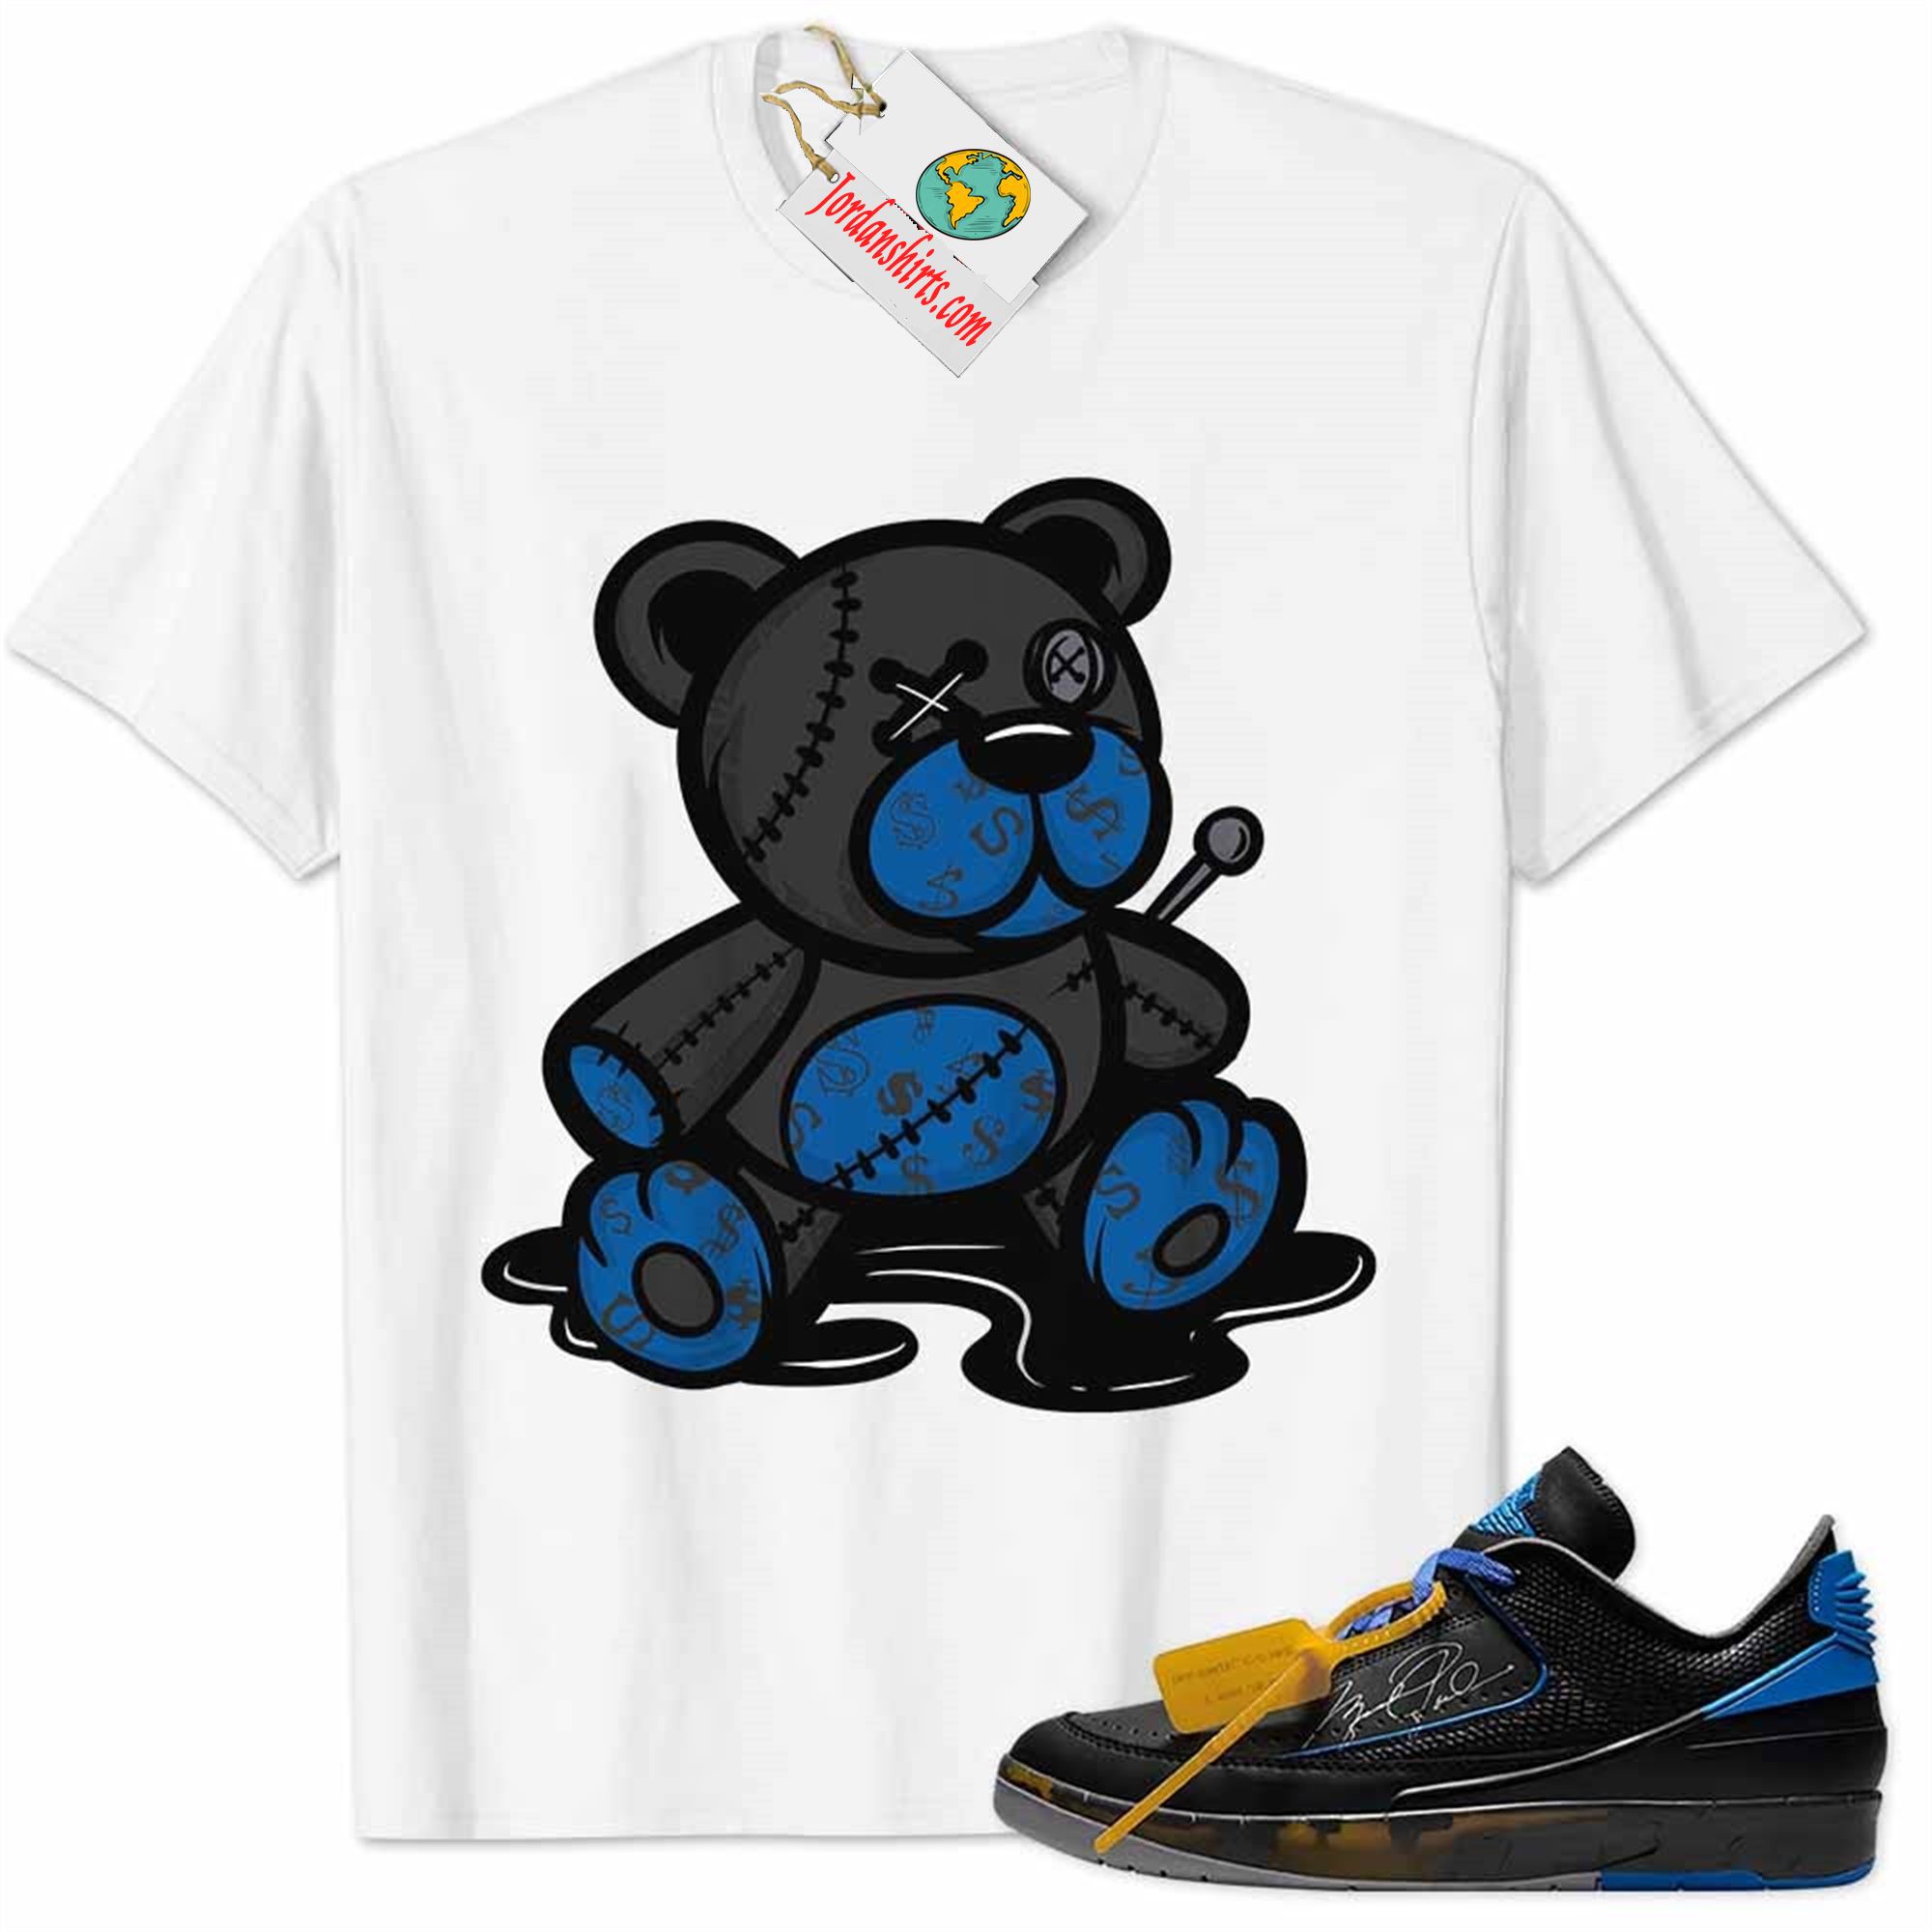 Jordan 2 Shirt, Jordan 2 Low X Off-white Black And Varsity Royal Shirt Teddy Bear All Money In White Size Up To 5xl